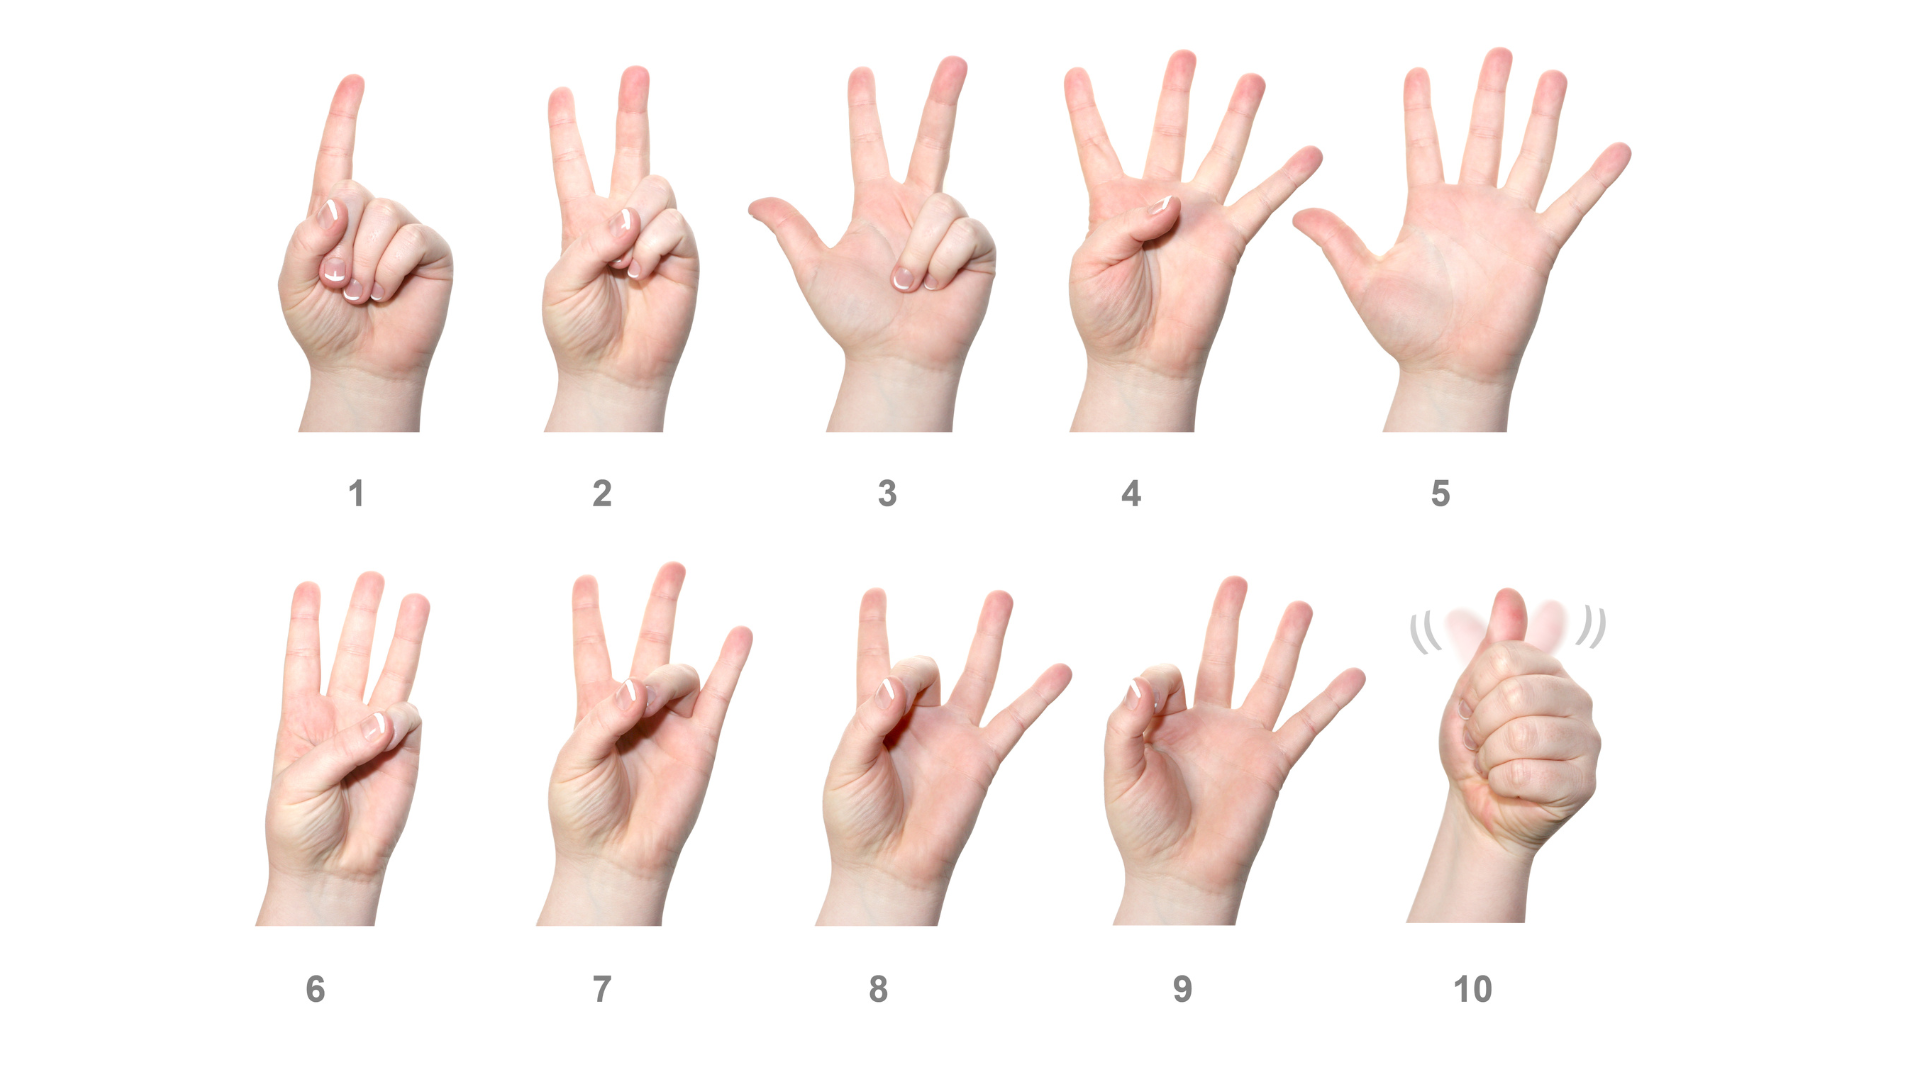 Немой на английском. Язык жестов цифры. Язык глухонемых цифры. Жесты руками. Цифры пальцами для глухонемых.